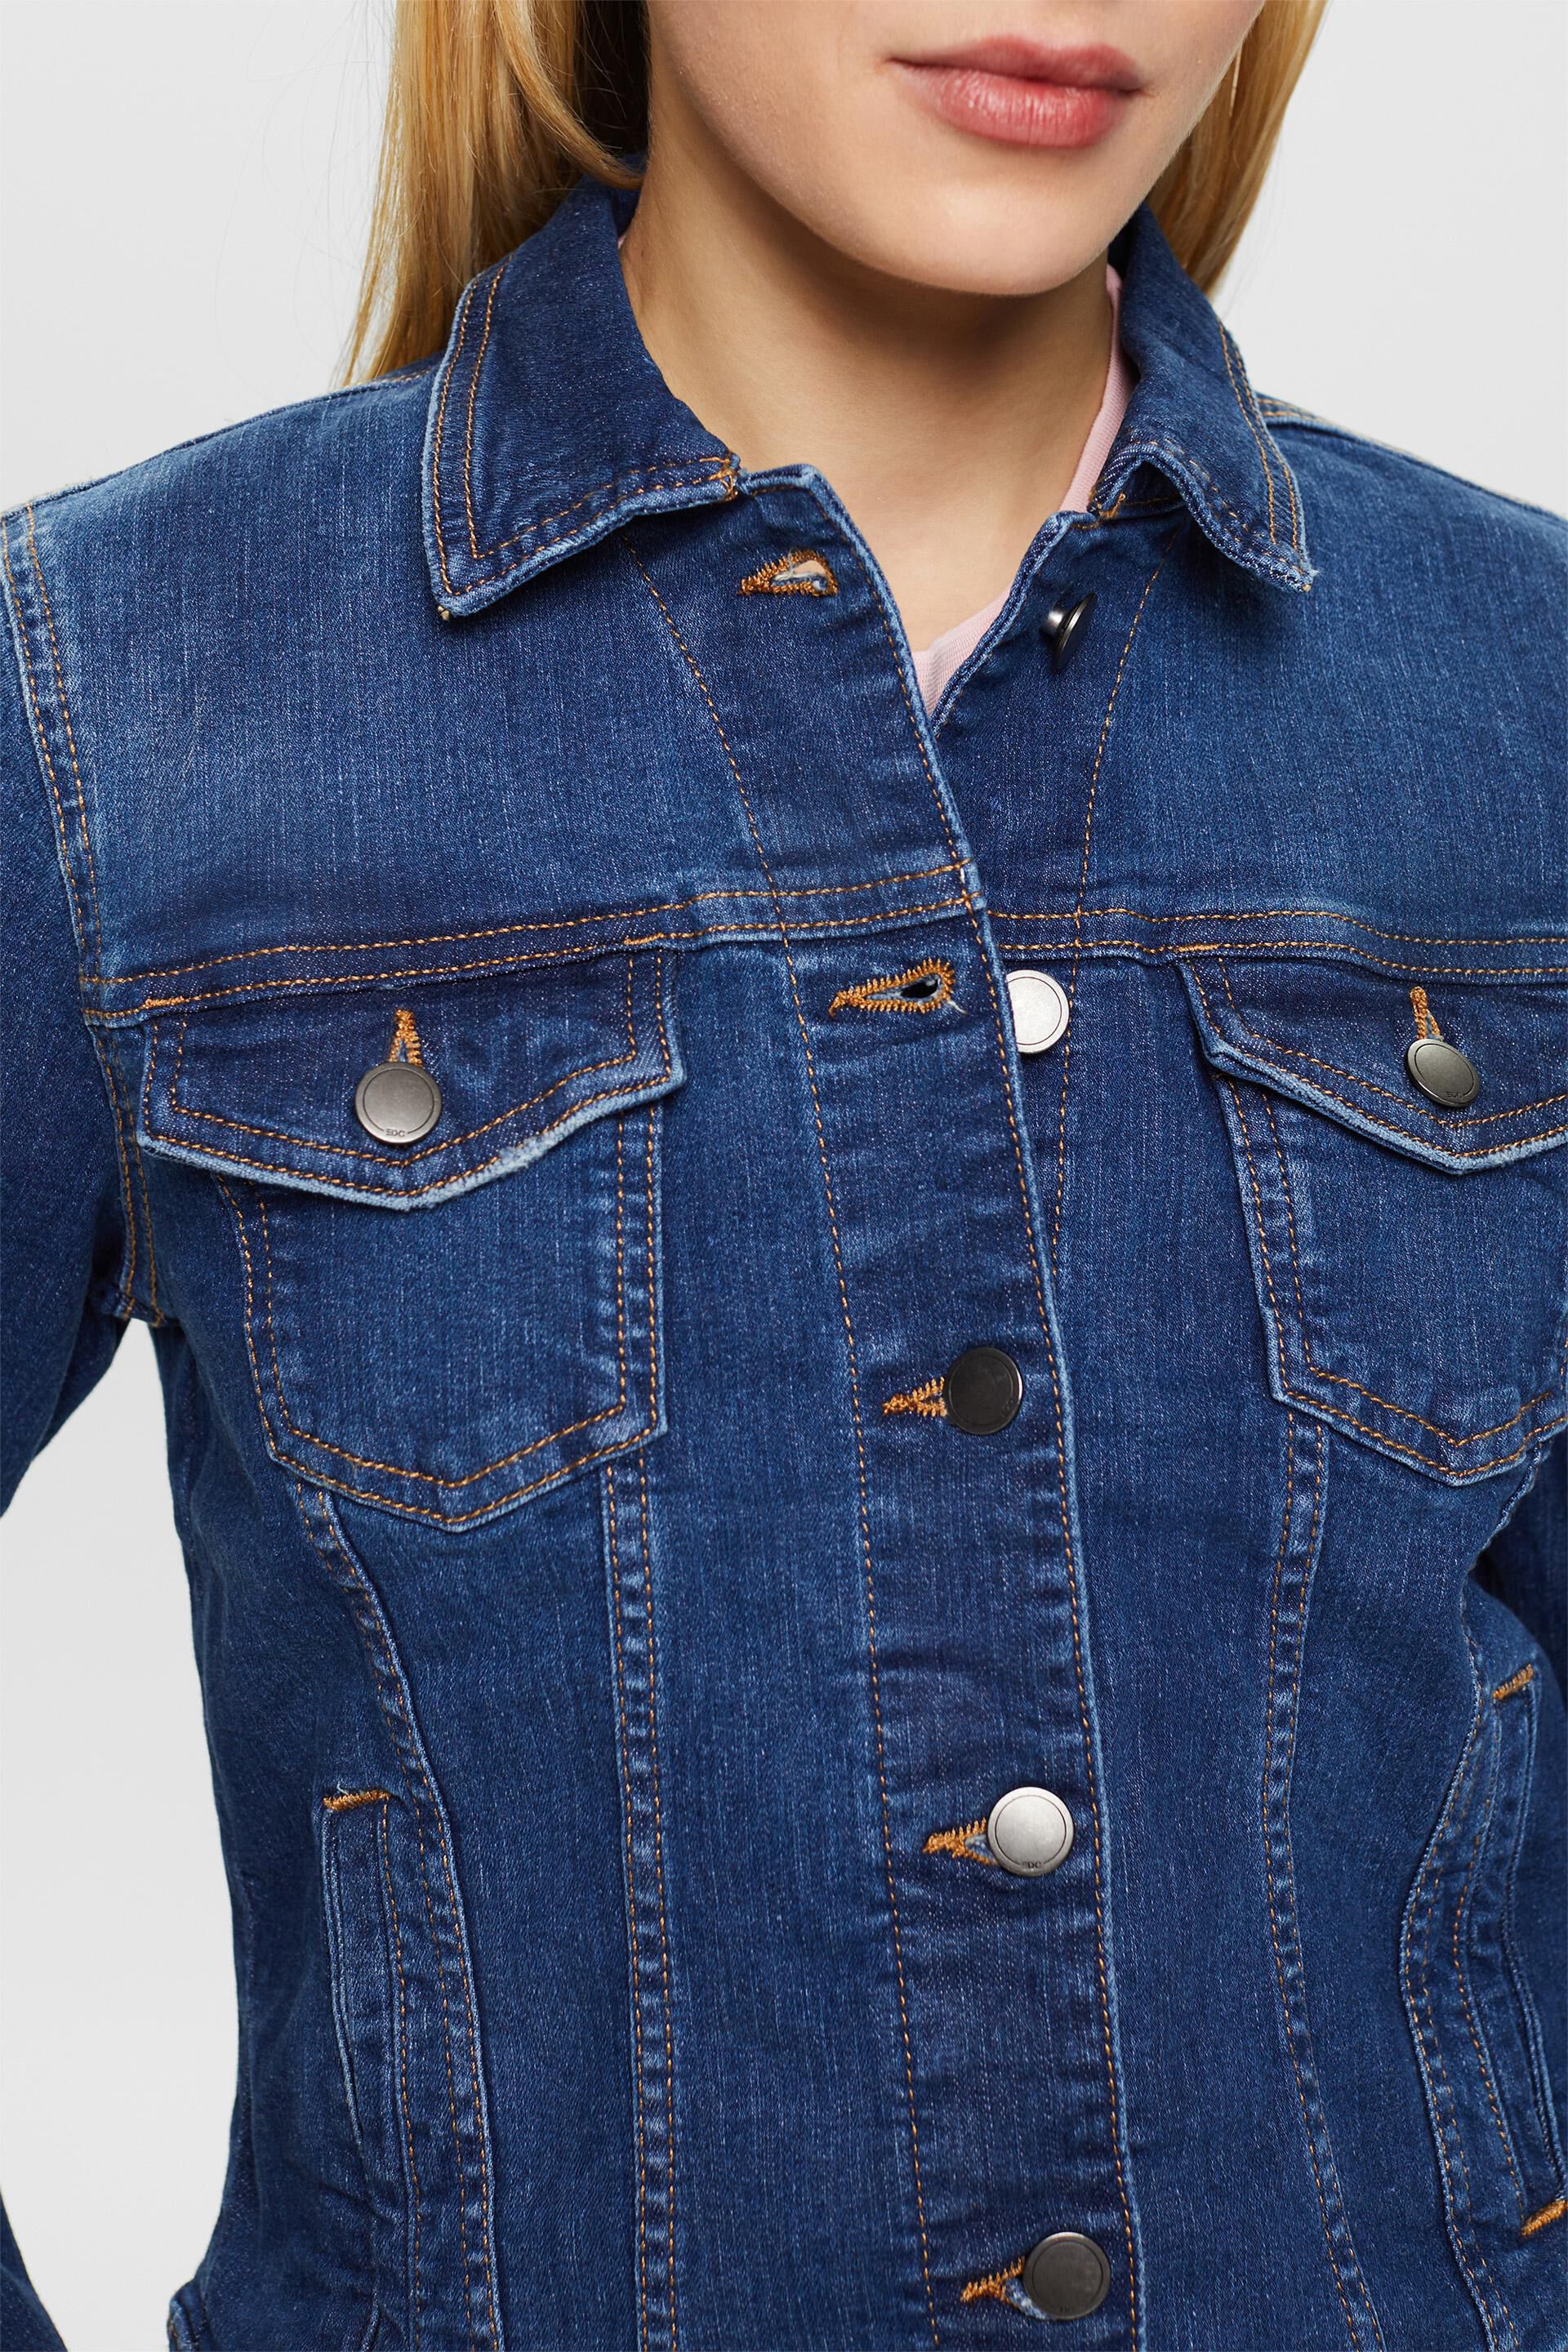 Buy FUNDAY FASHION Full Sleeve Blue Solid Women's Denim Jacket (Medium, New  Light Blue) at Amazon.in